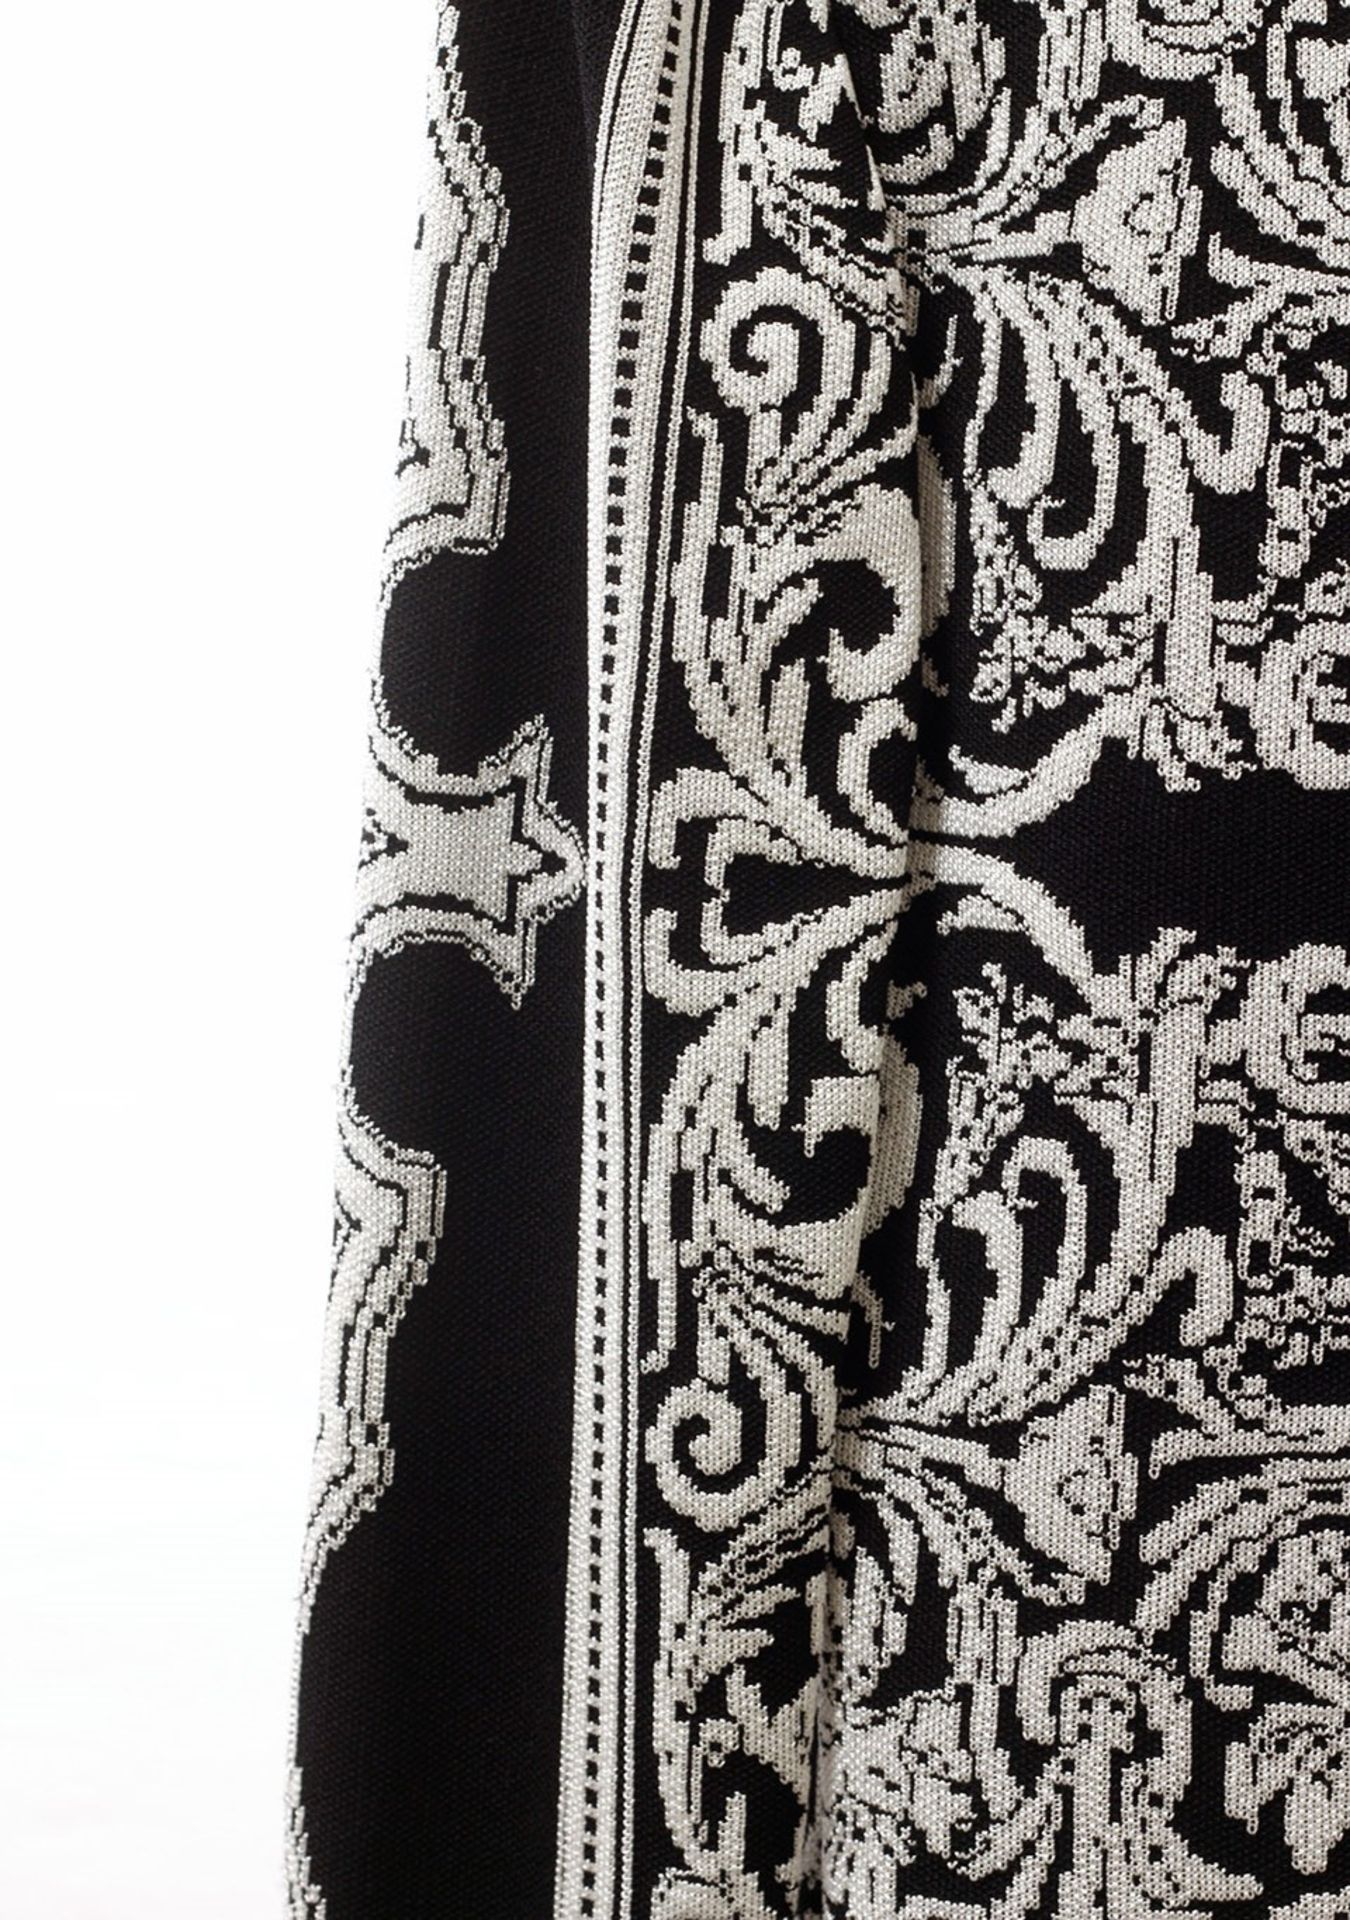 1 x Balmain Black White Jacket - Size: 18 - Material: 88% viscose, 10% Polyester, 2% Nylon - From - Image 3 of 13